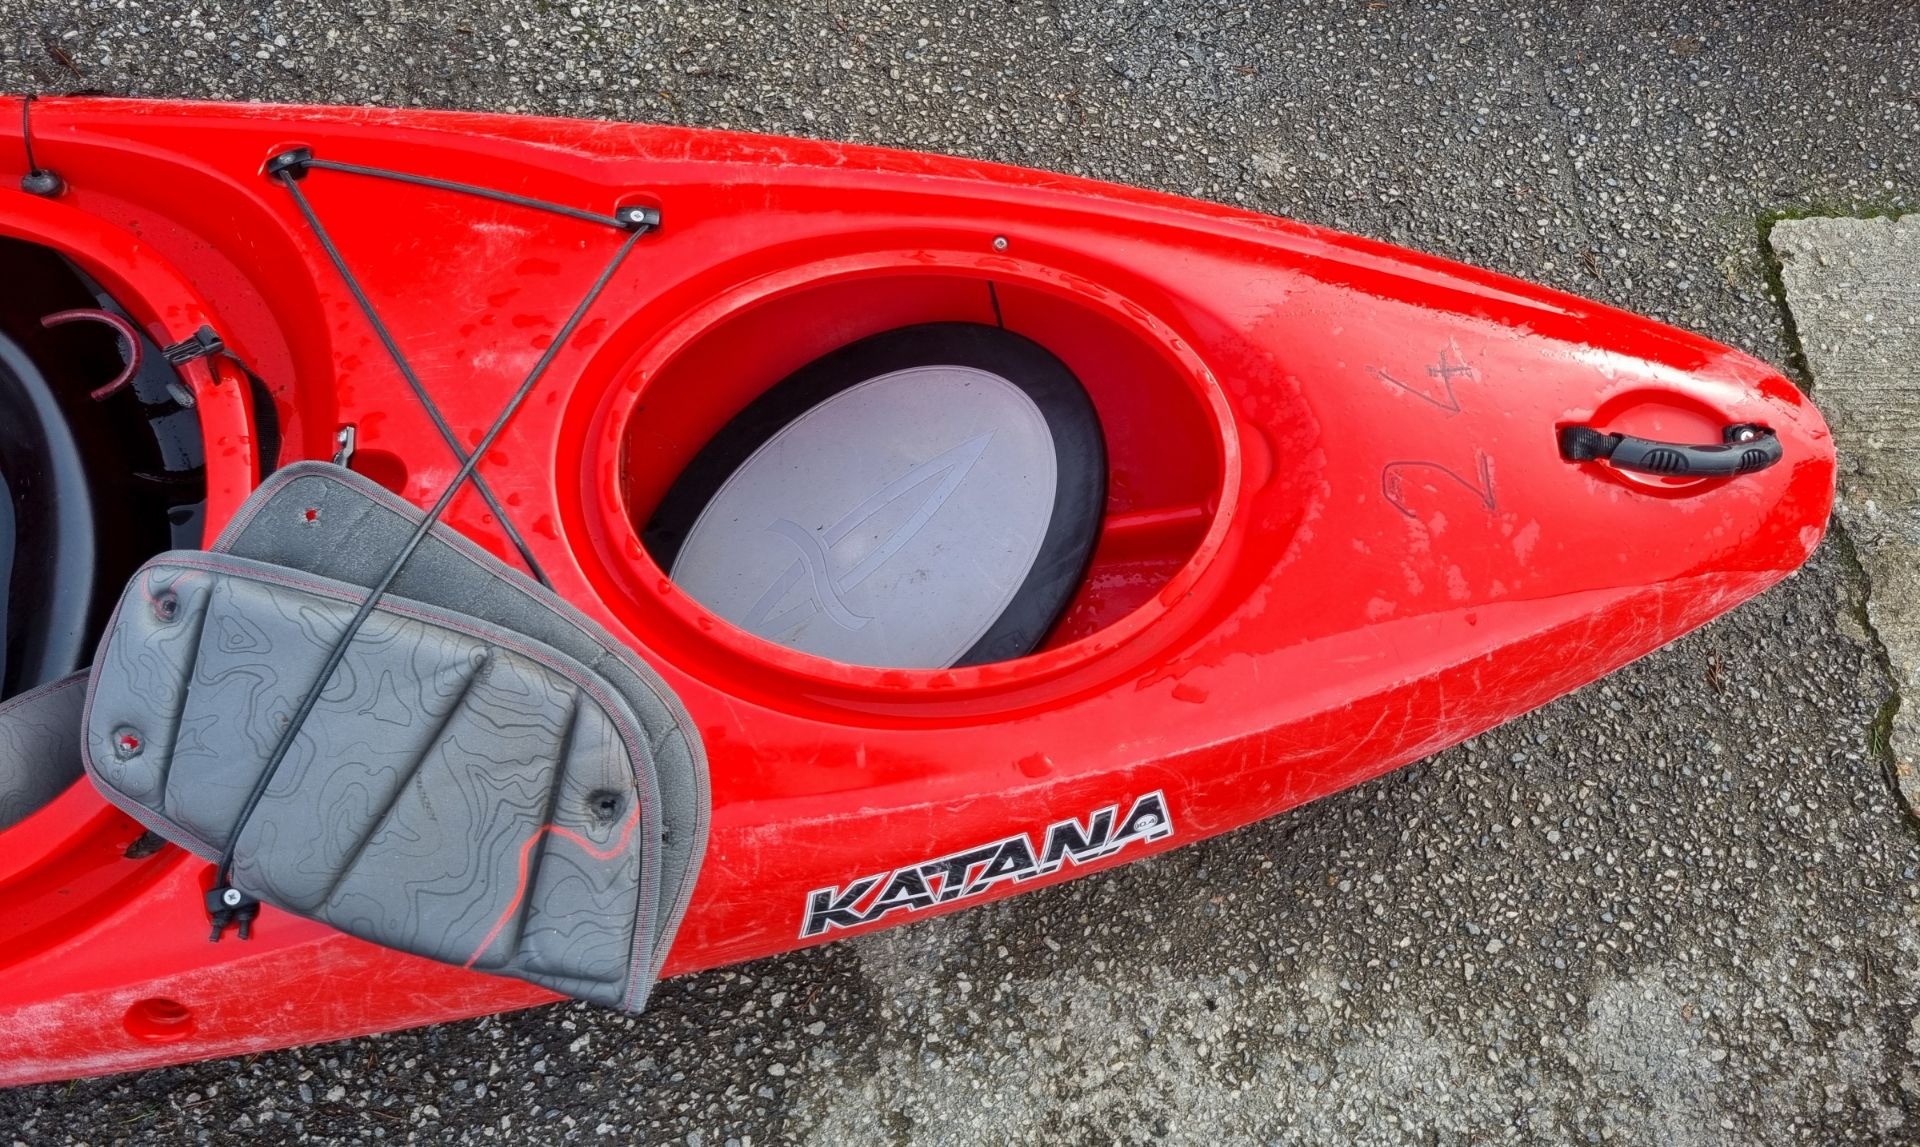 Dagger Katana polyethylene kayak - red - W 3200 x D 660 x H 420mm - Image 5 of 9